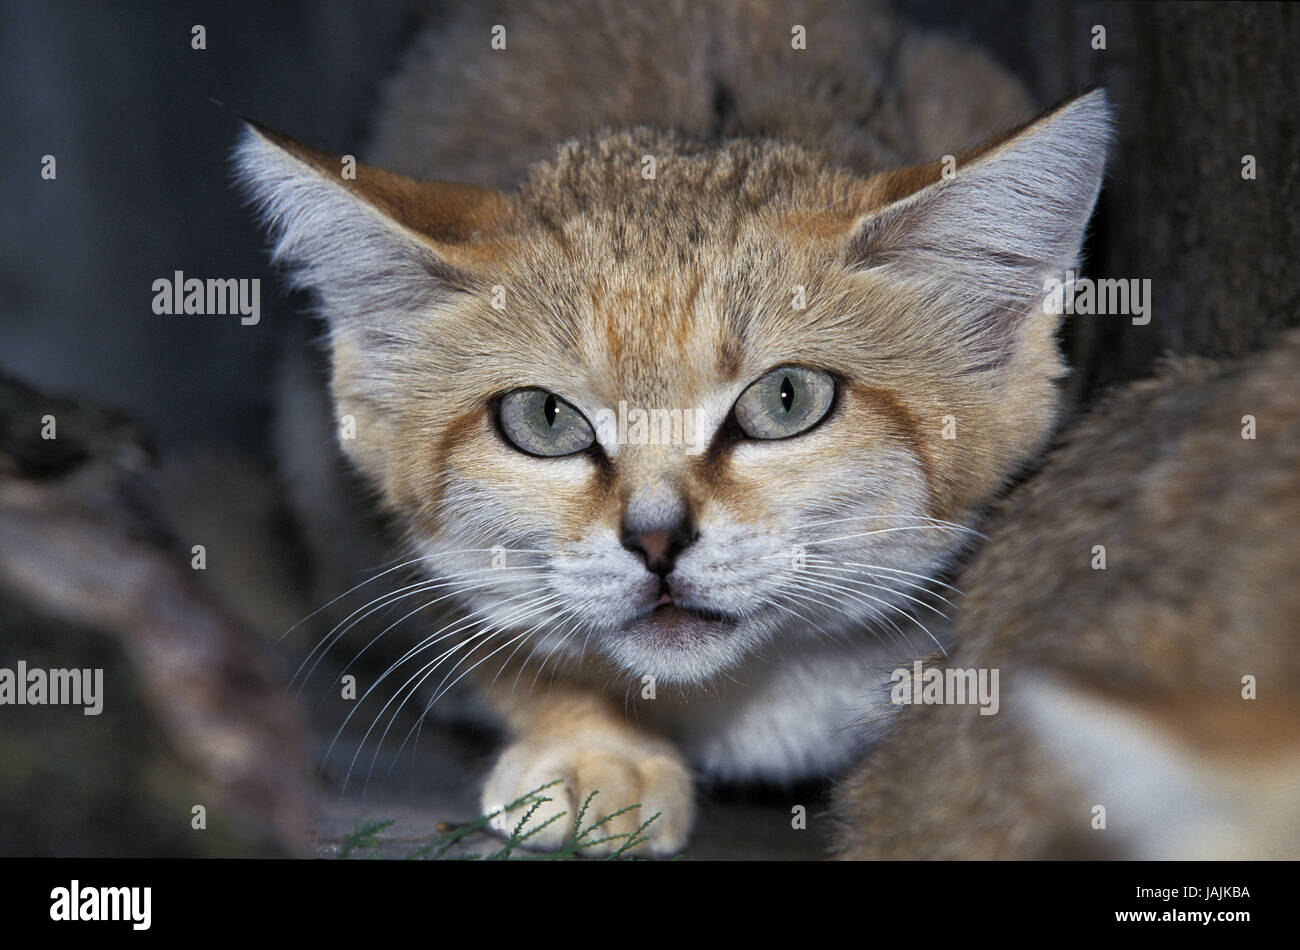 Sand cat,Felis margarita,portrait, Stock Photo